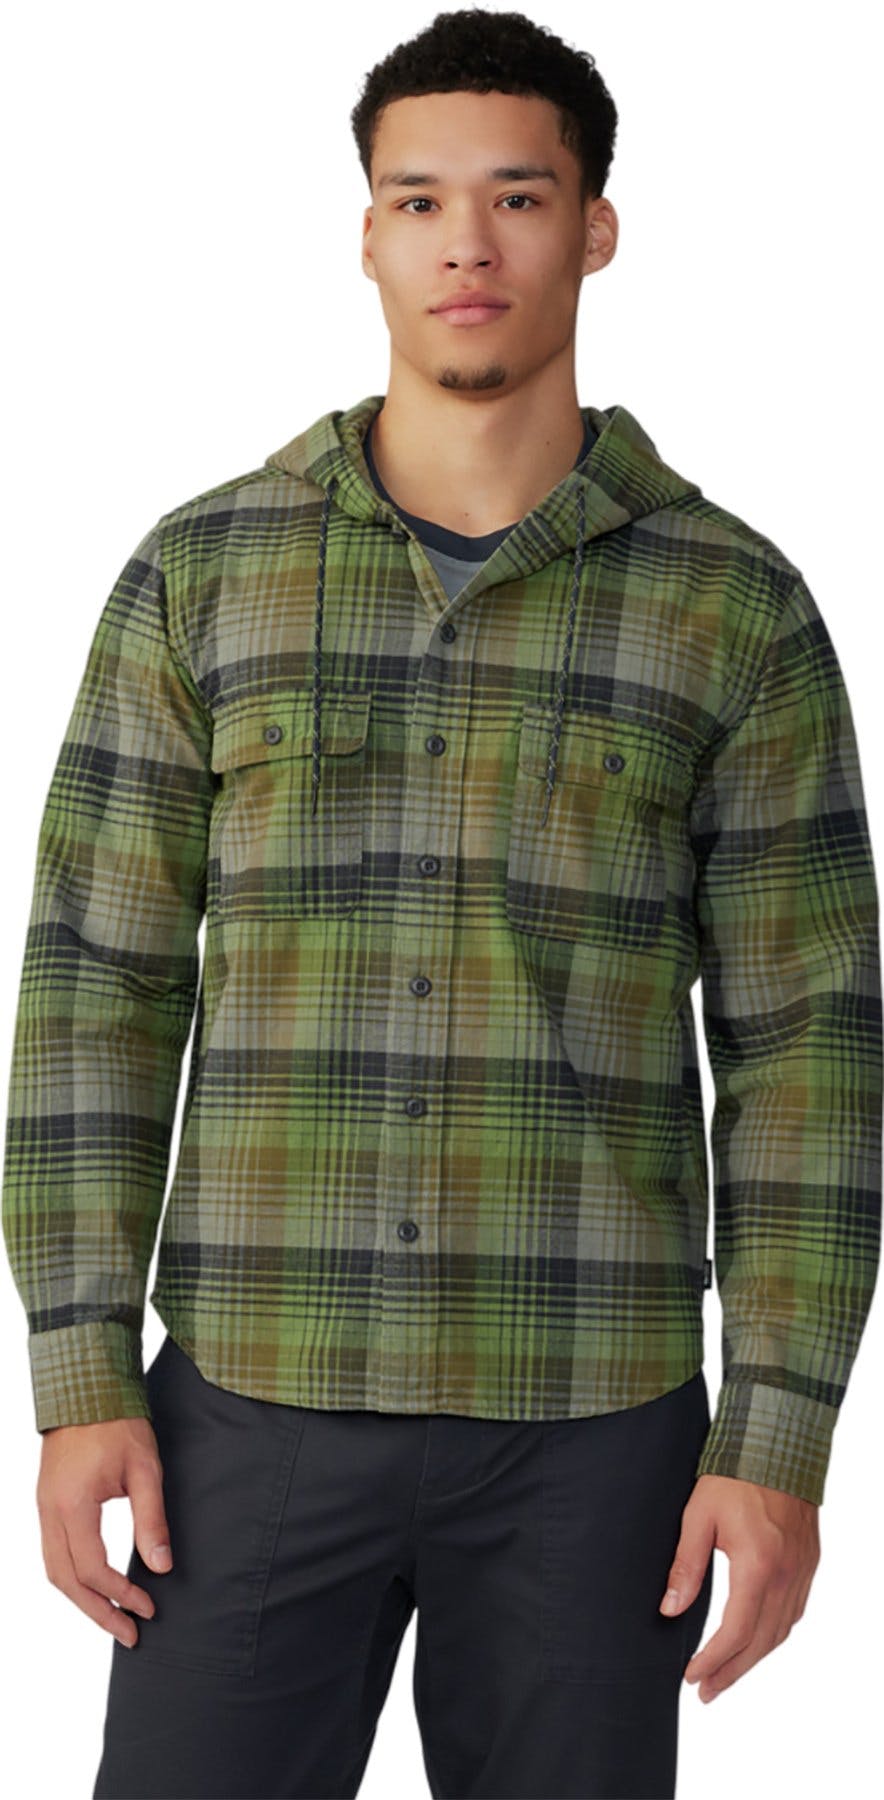 Product image for Dusk Creek Long Sleeve Hooded Shirt - Men's